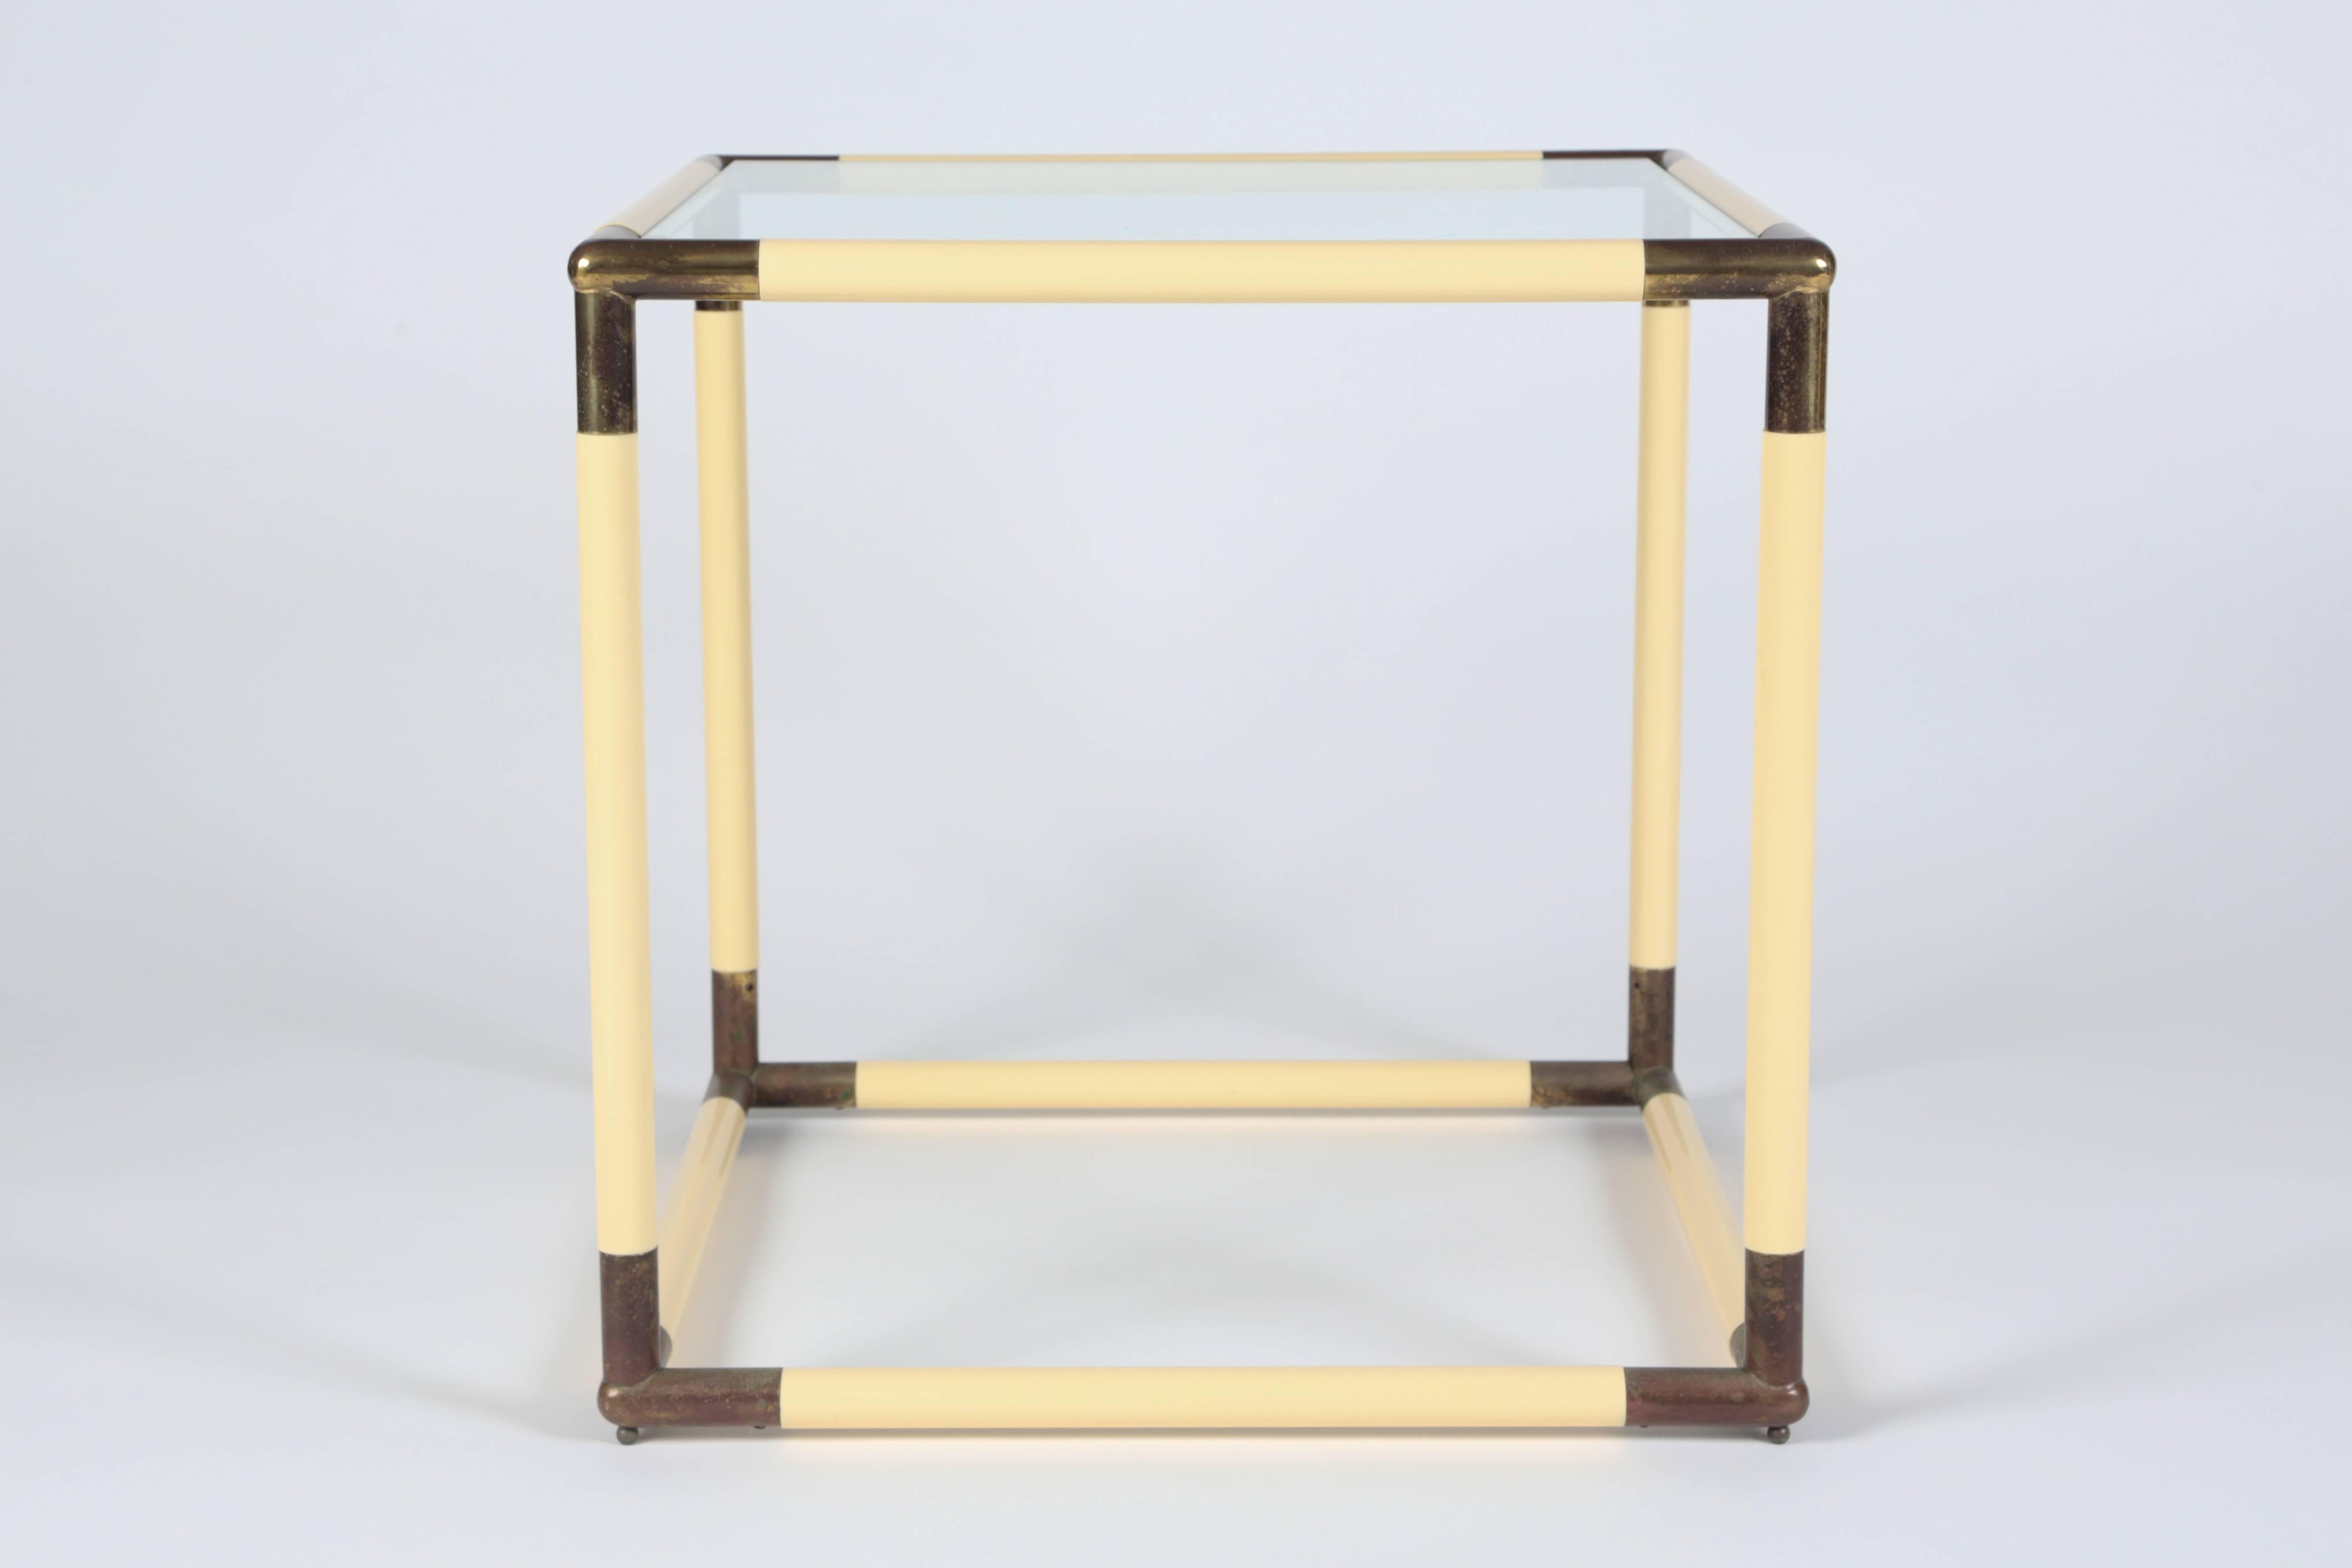 Modernist Italian Geometric Cube Form Glass Top Table 1